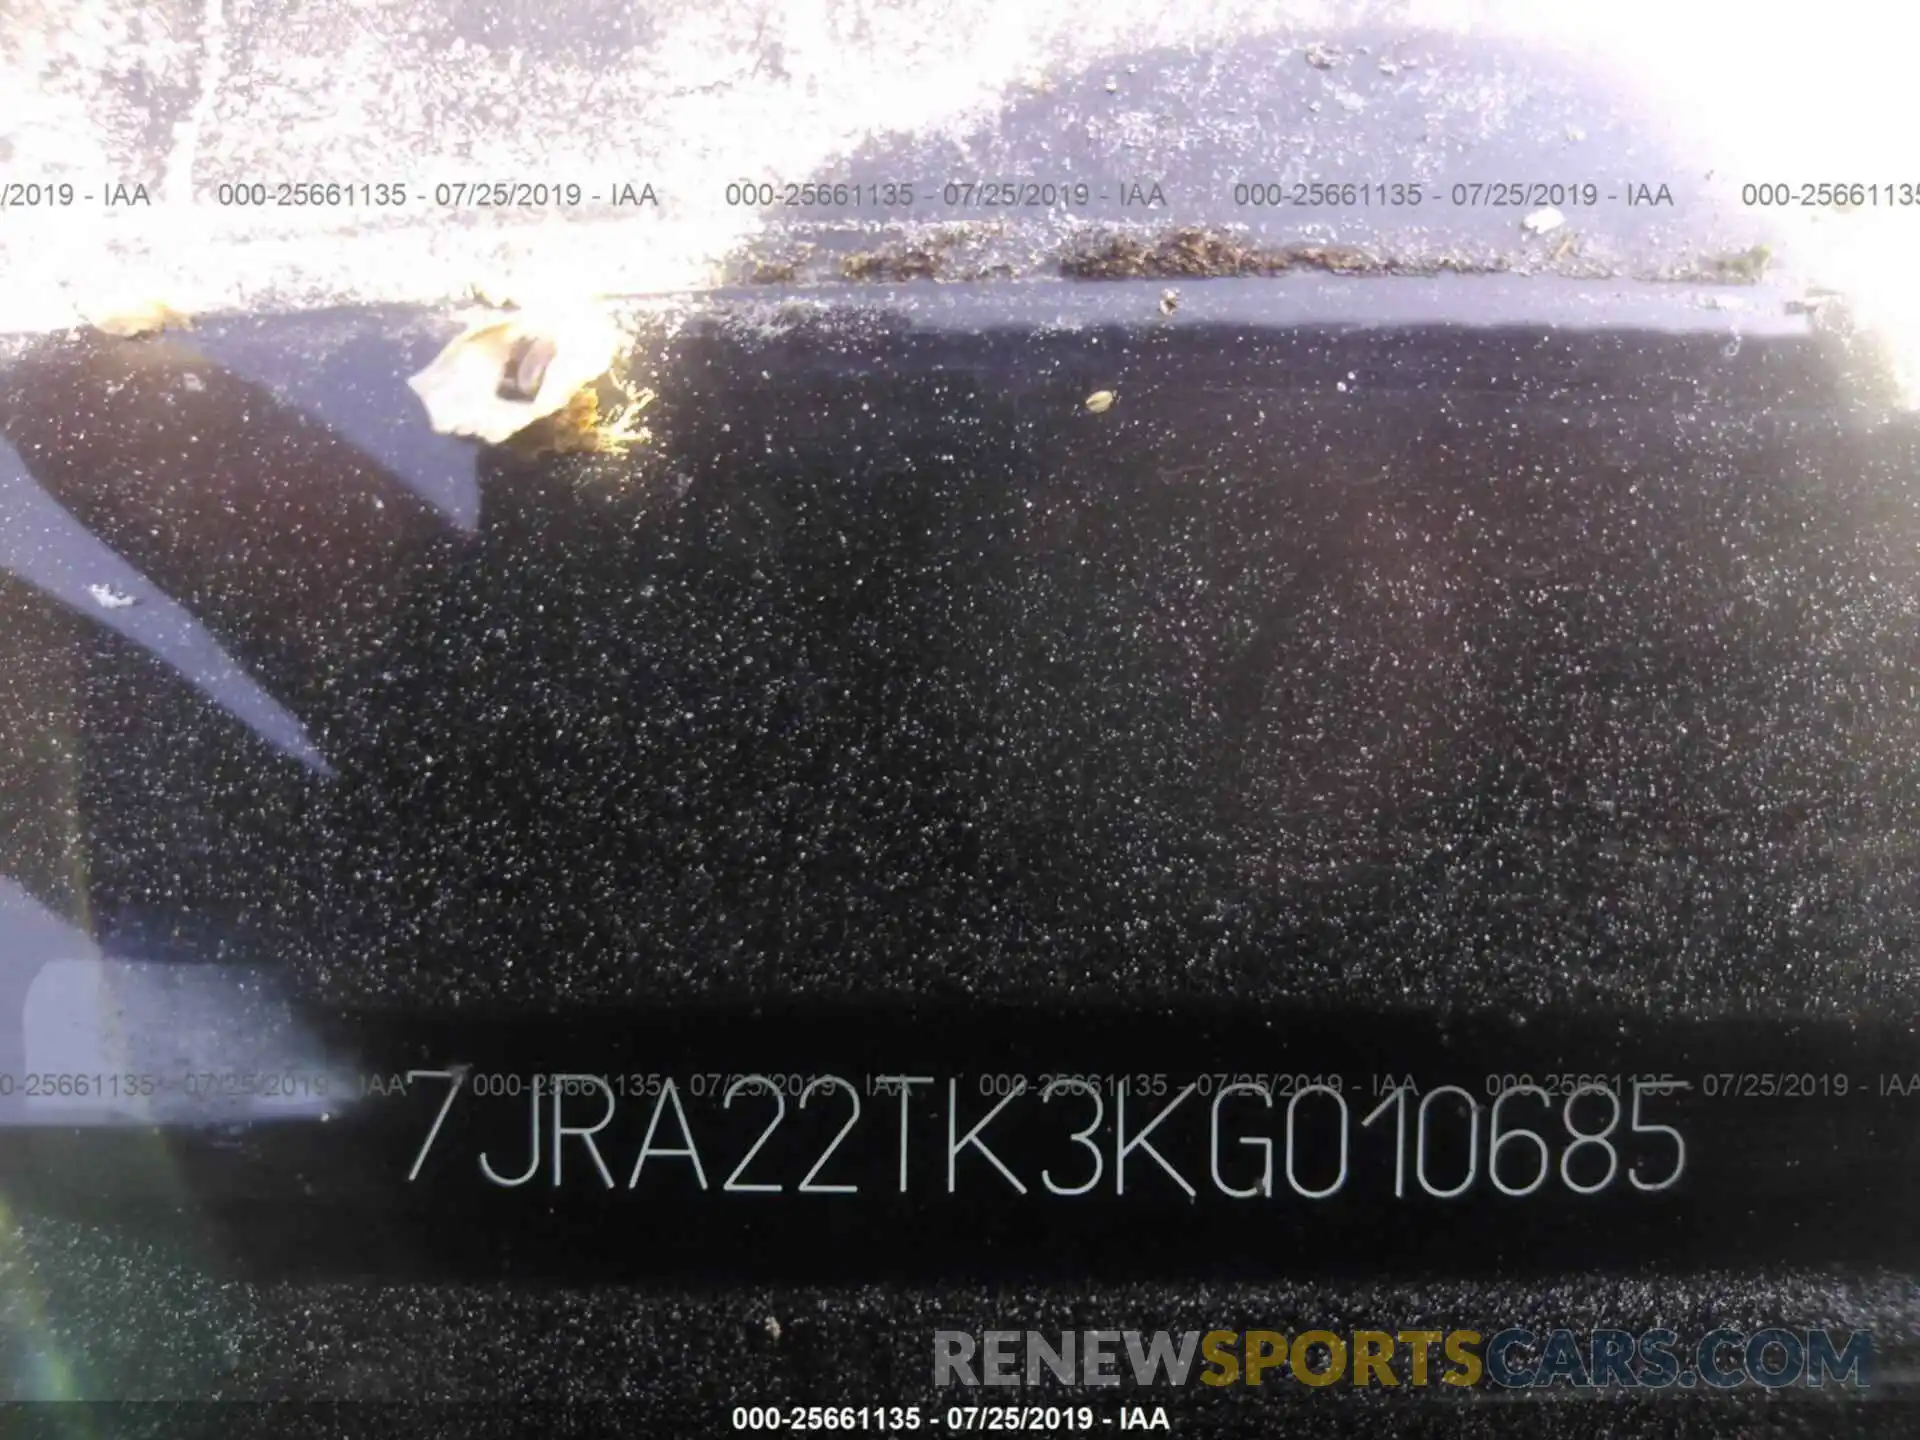 9 Photograph of a damaged car 7JRA22TK3KG010685 VOLVO S60 2019